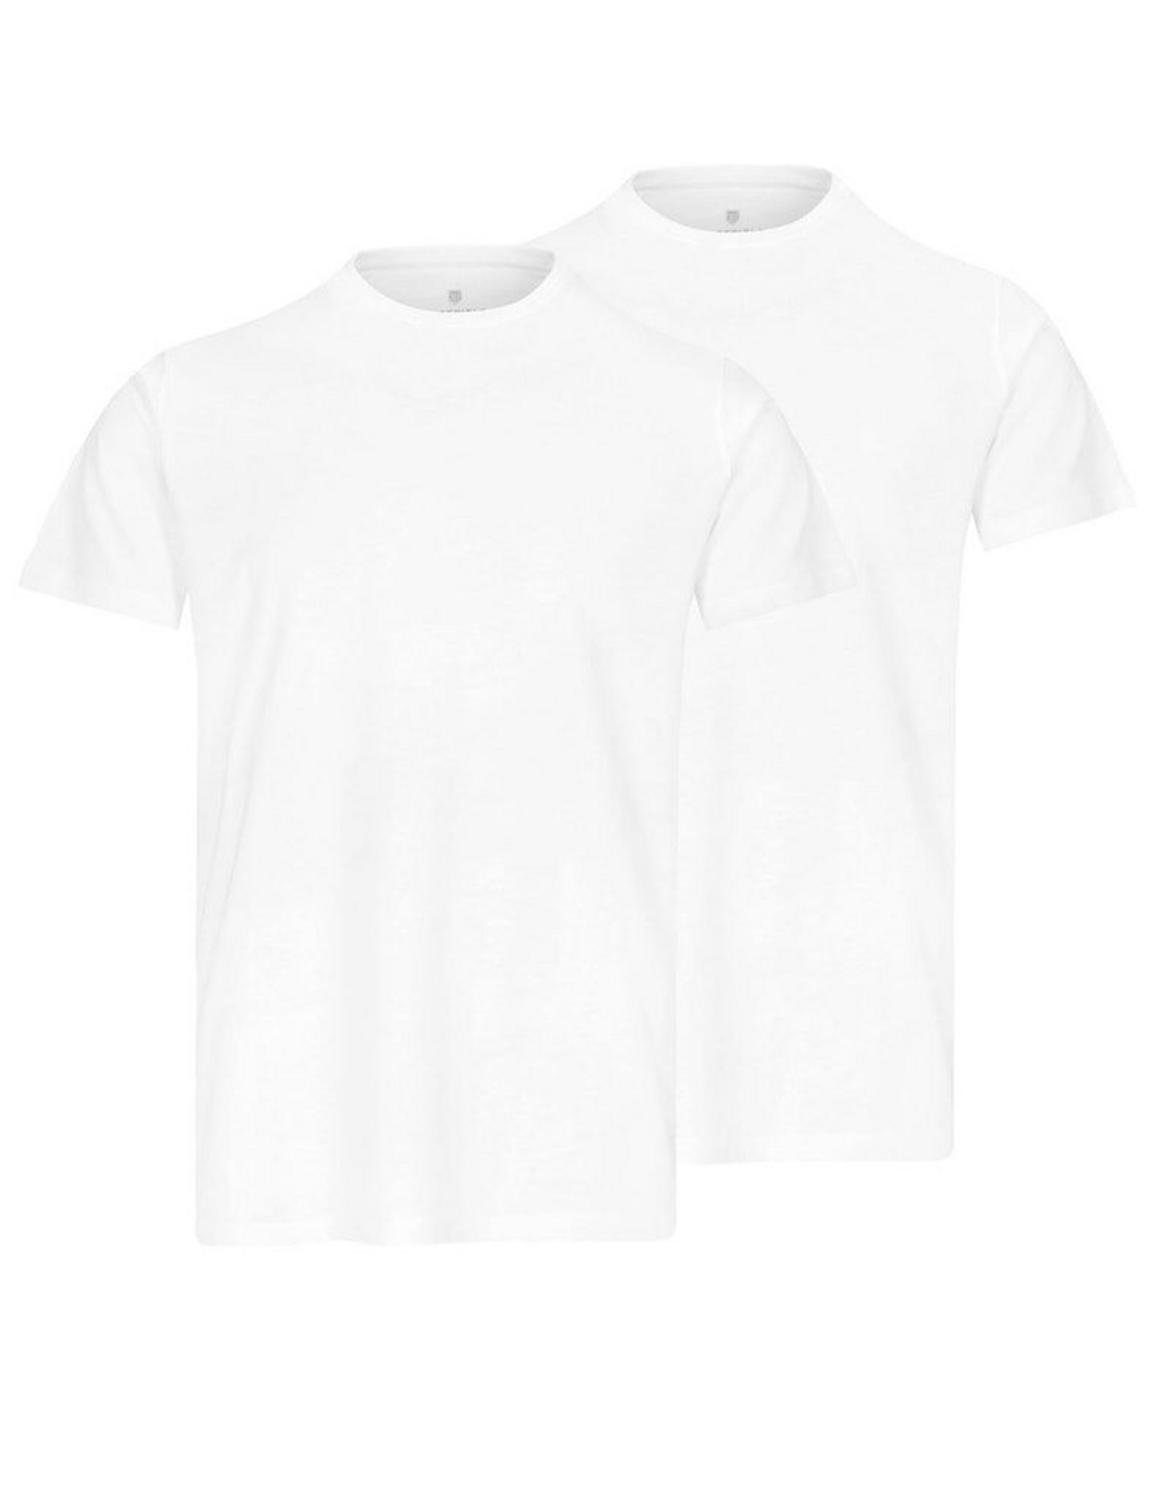 BASEFIELD T-Shirt NOS Rdh-Doppelpack